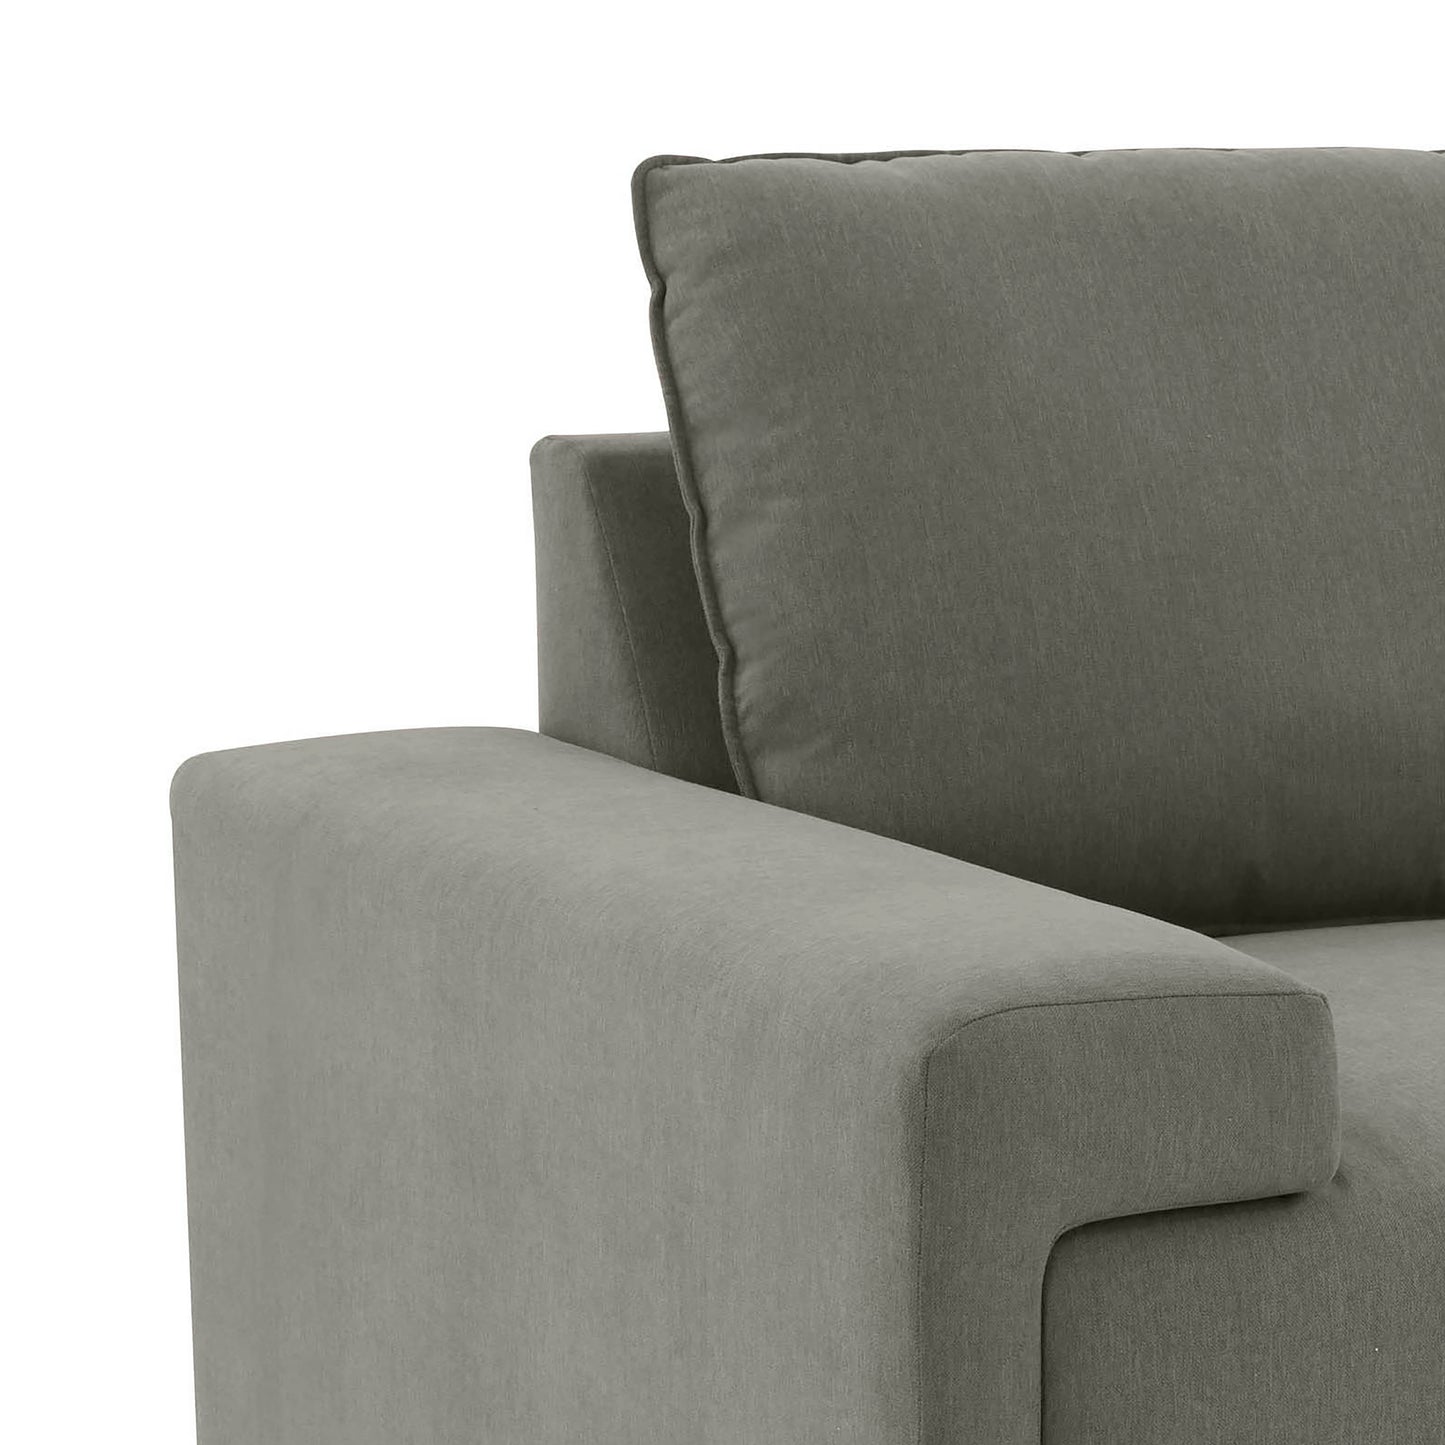 Tov Furniture Maeve Slate Accent Chair